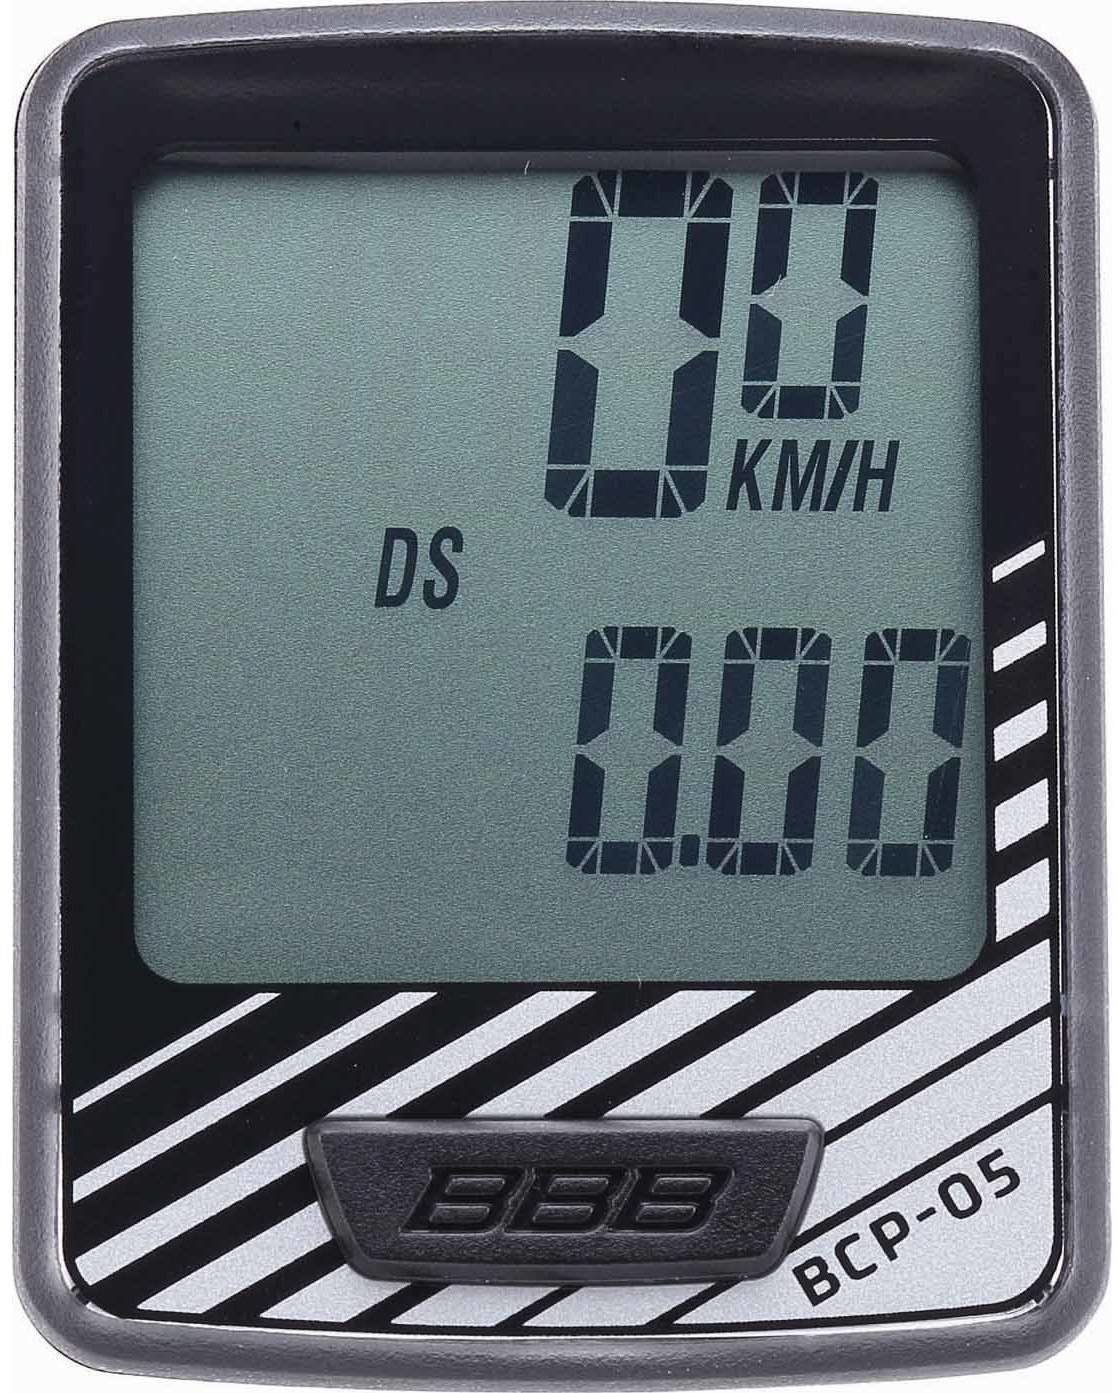 Cycling electronics BBB DashBoard 7